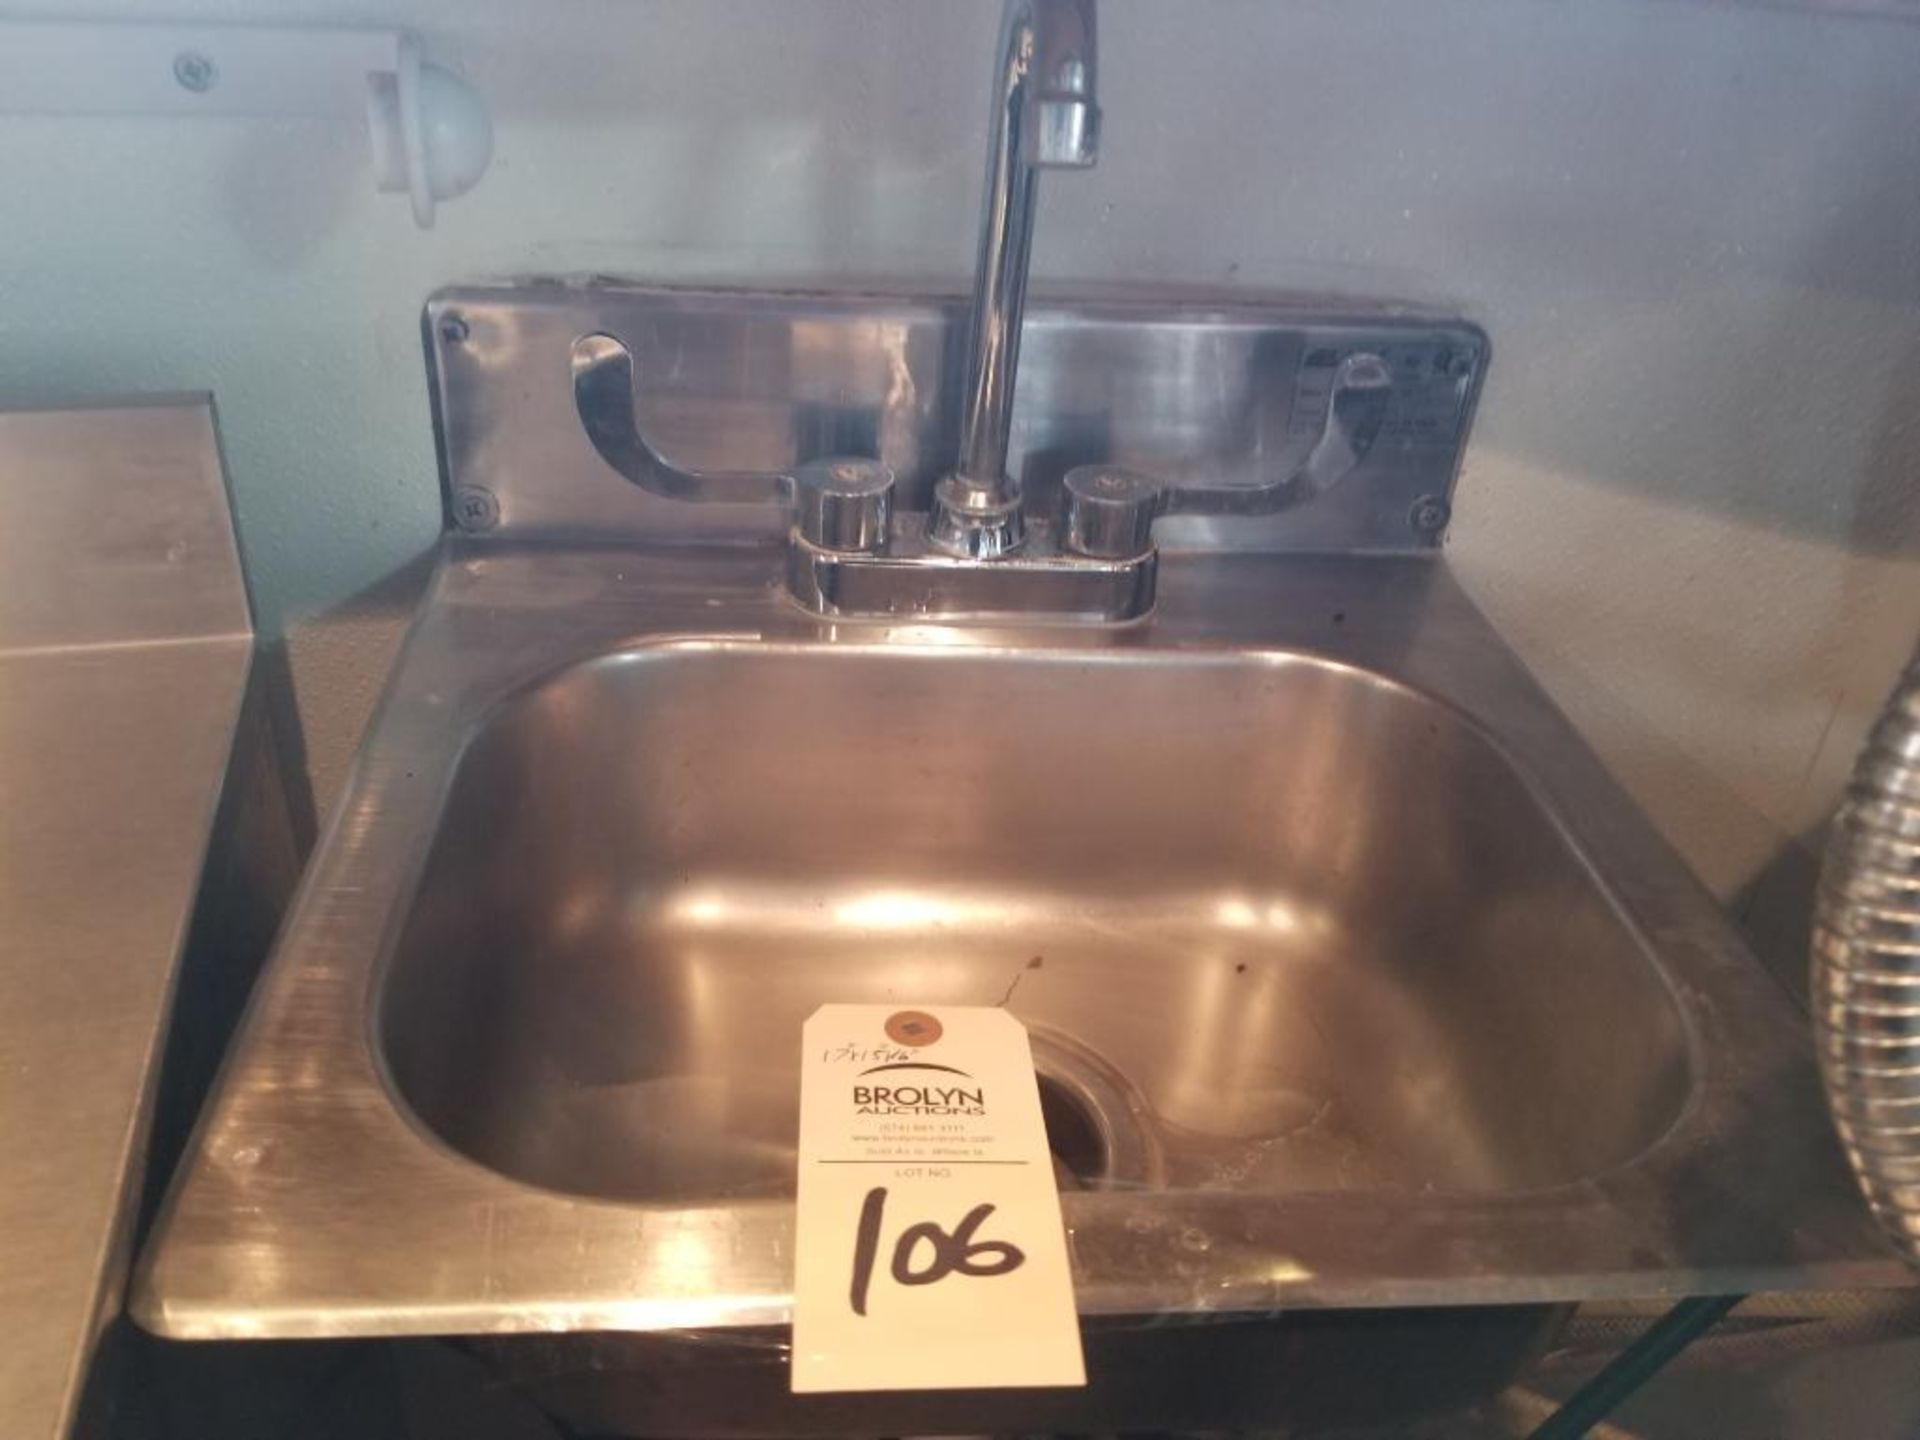 Stainless Steel wash sink. 17" x 15" x 16".